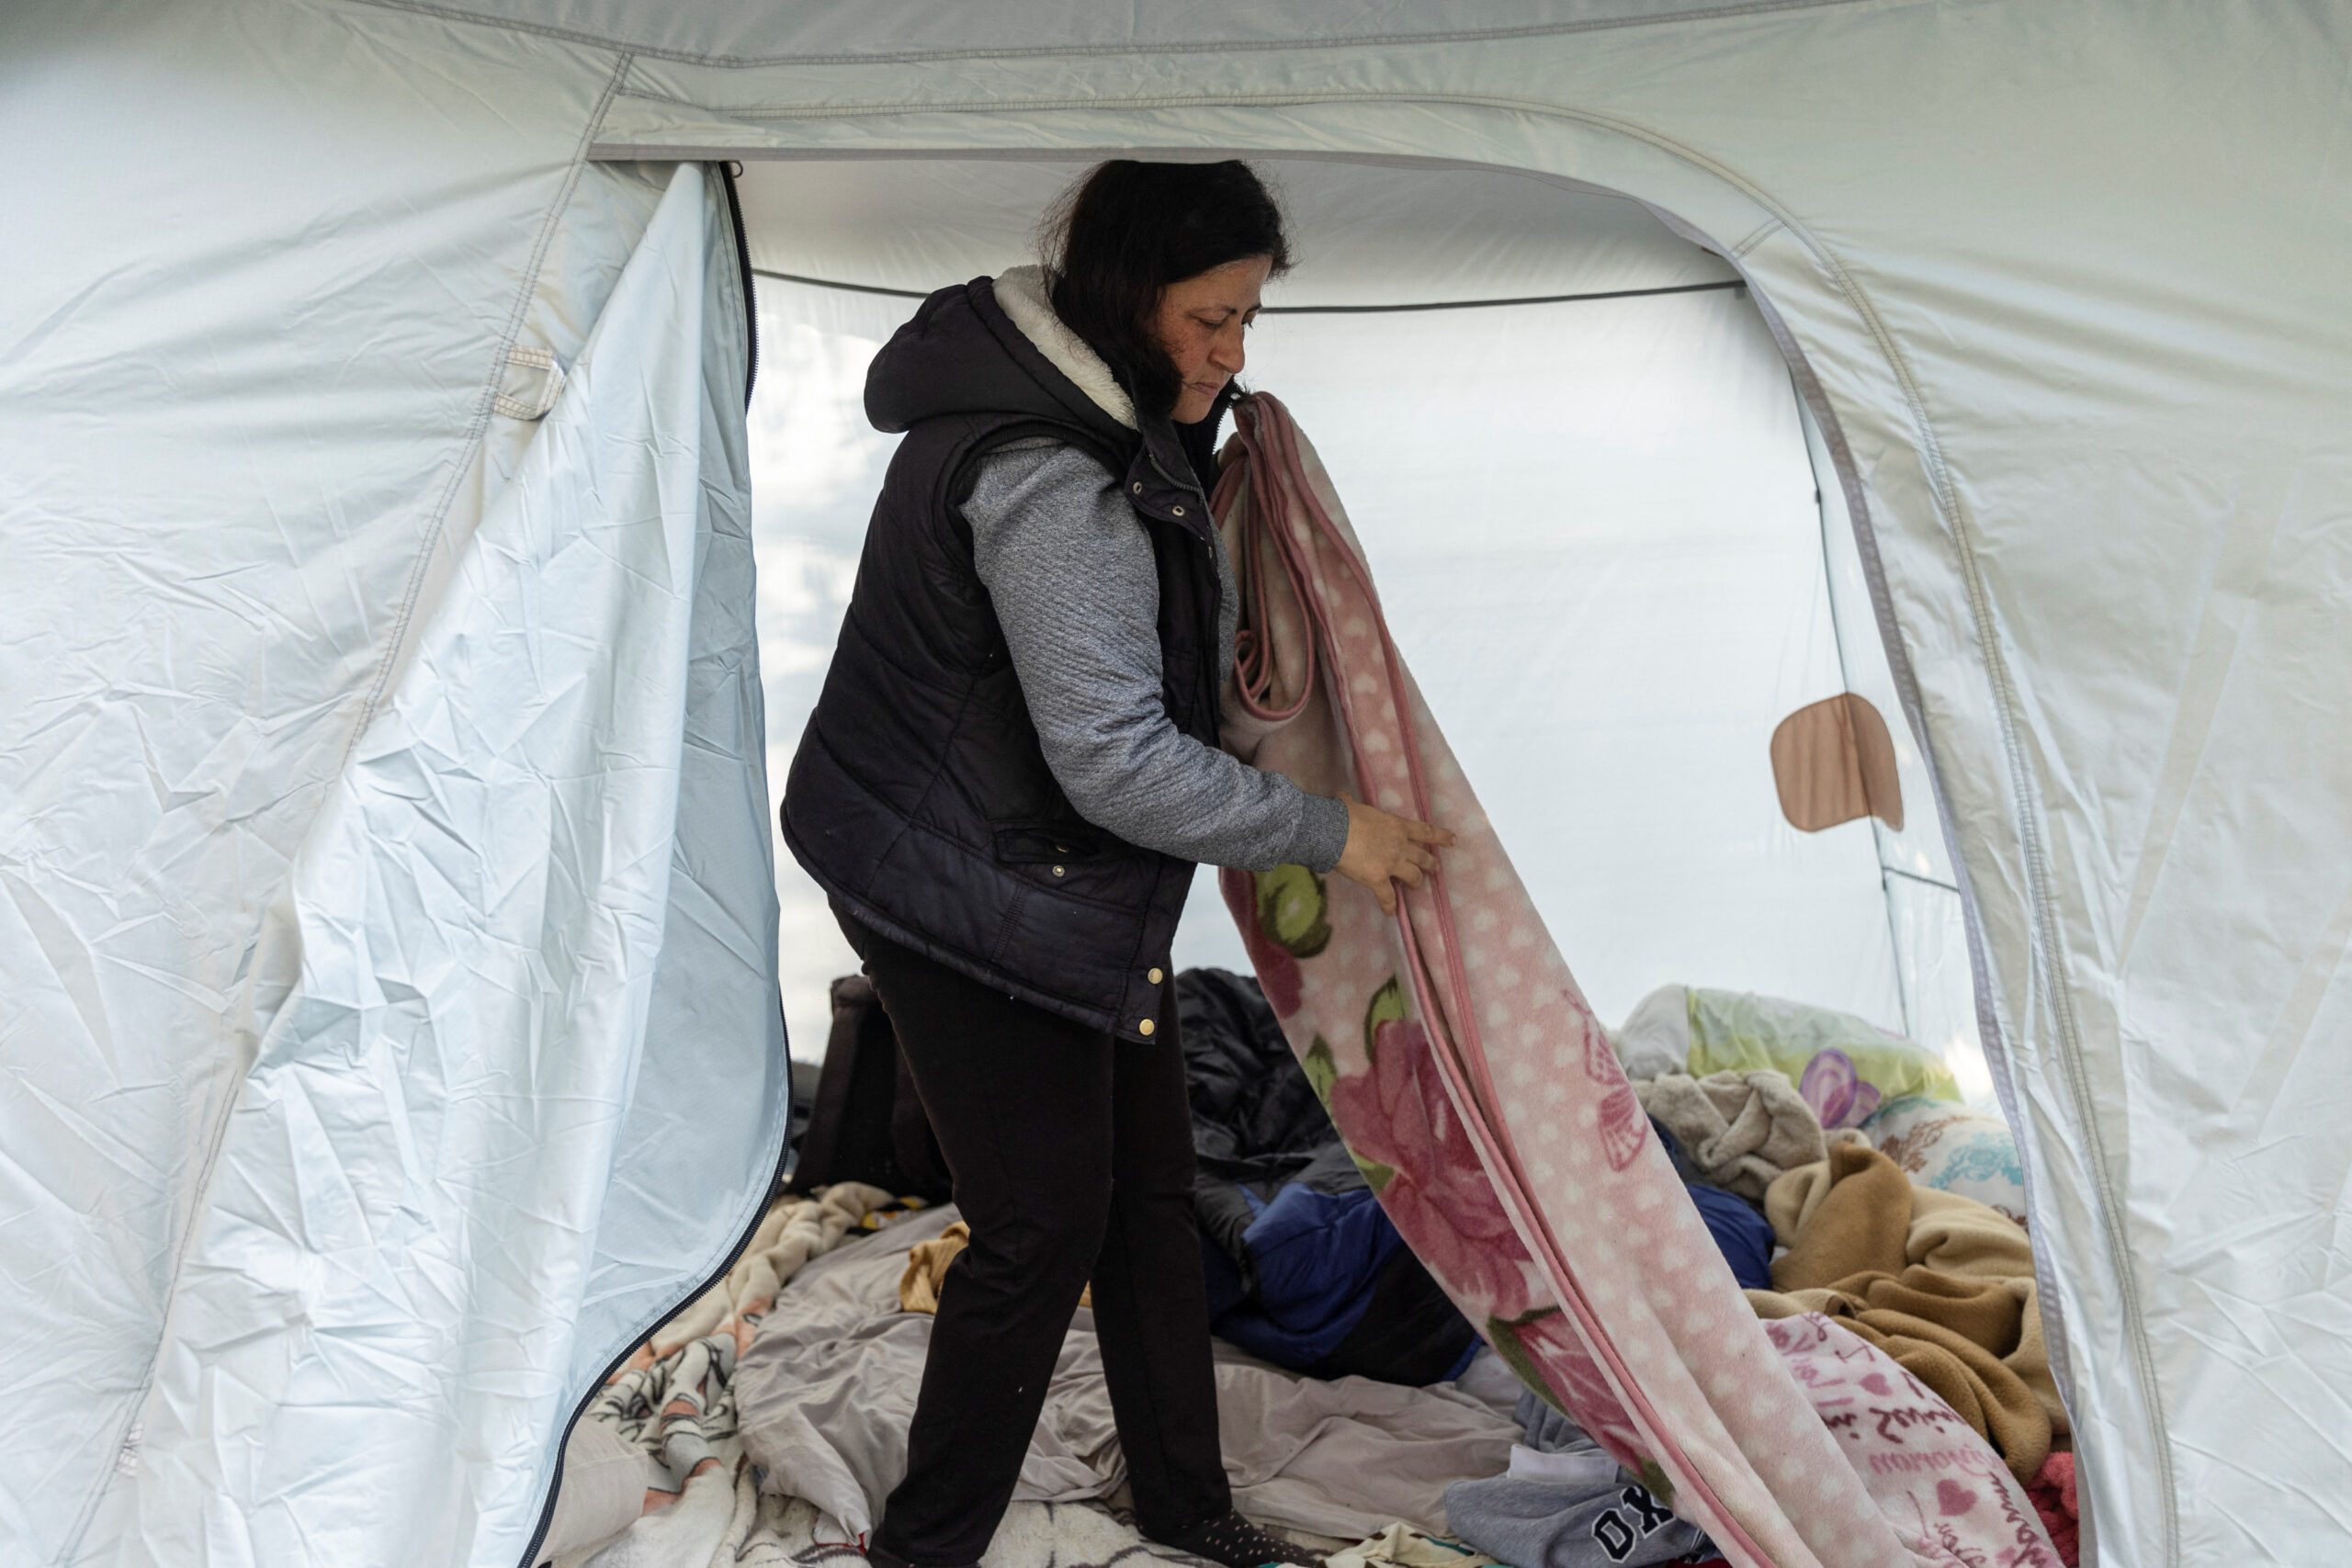 Turkey quake survivors struggle to find shelter nearly 3 weeks on